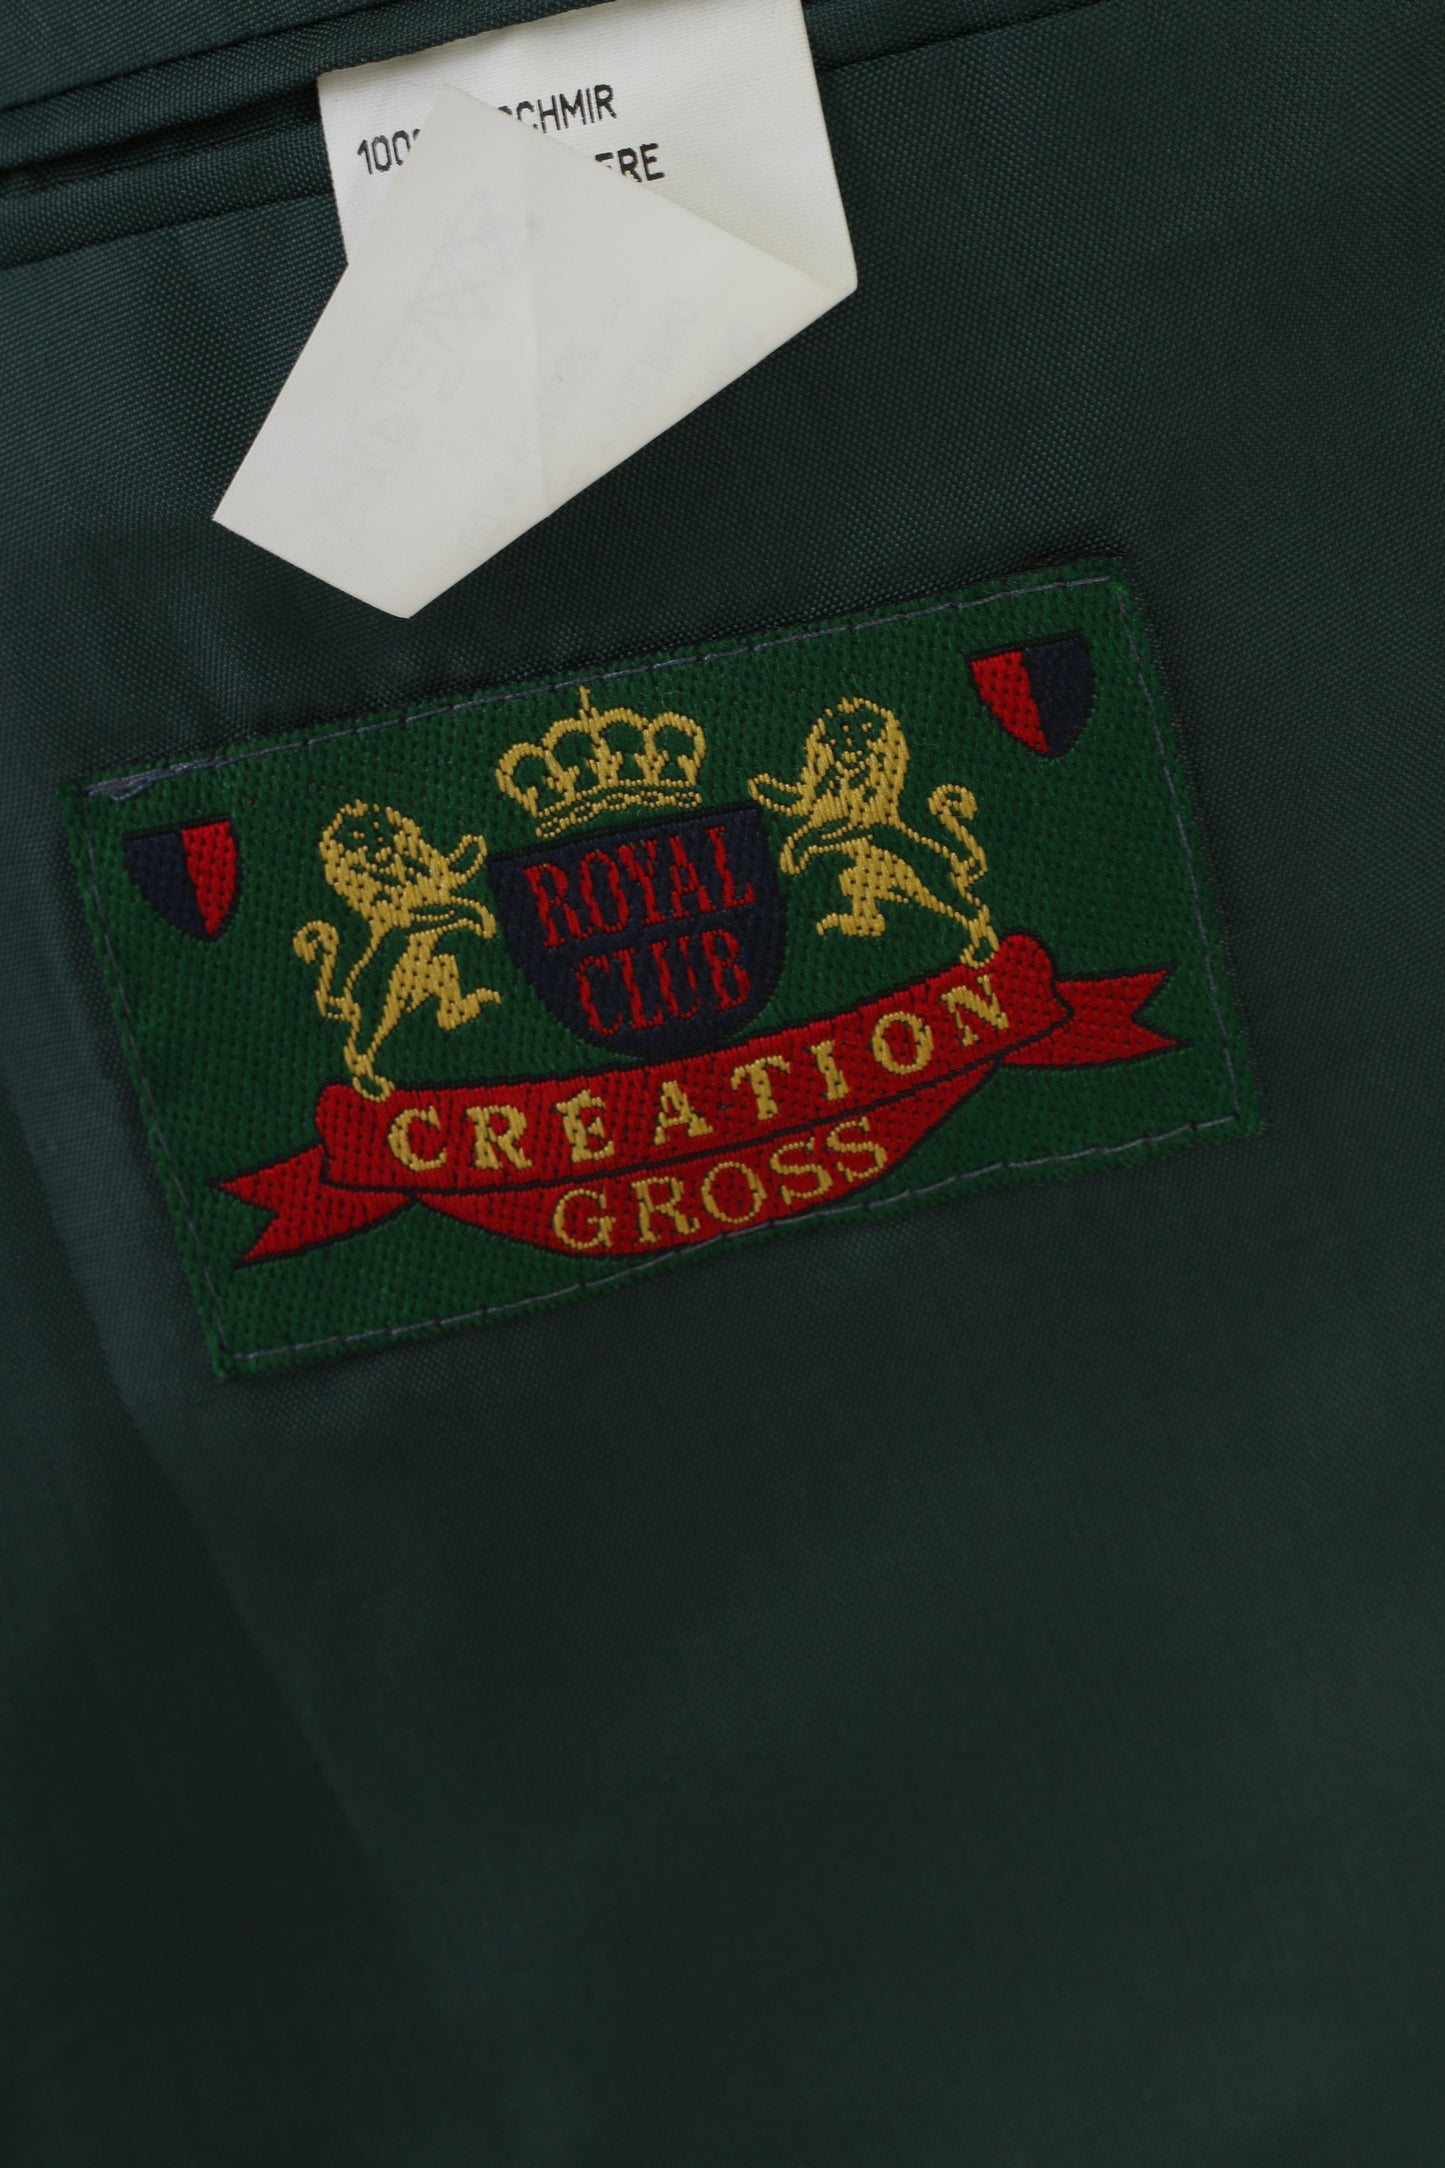 Creation Gross Men 42 Blazer Green Royal Club 100% Caschmere Vintage Single Breasted Gaenslen Volter Jacket